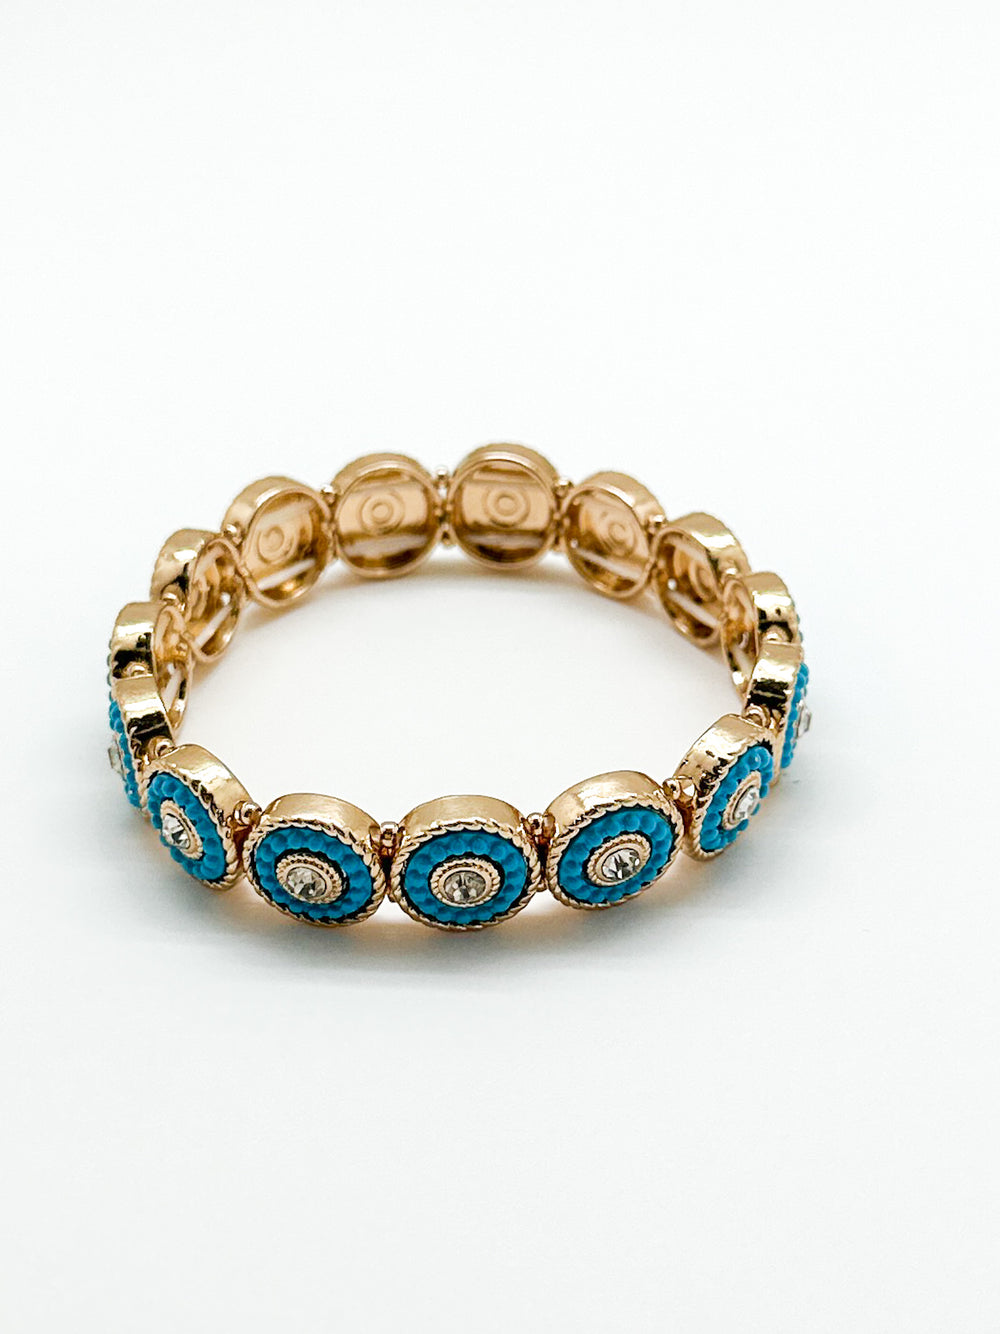 Mabe gold bracelet. gold stretch bracelet with crystals